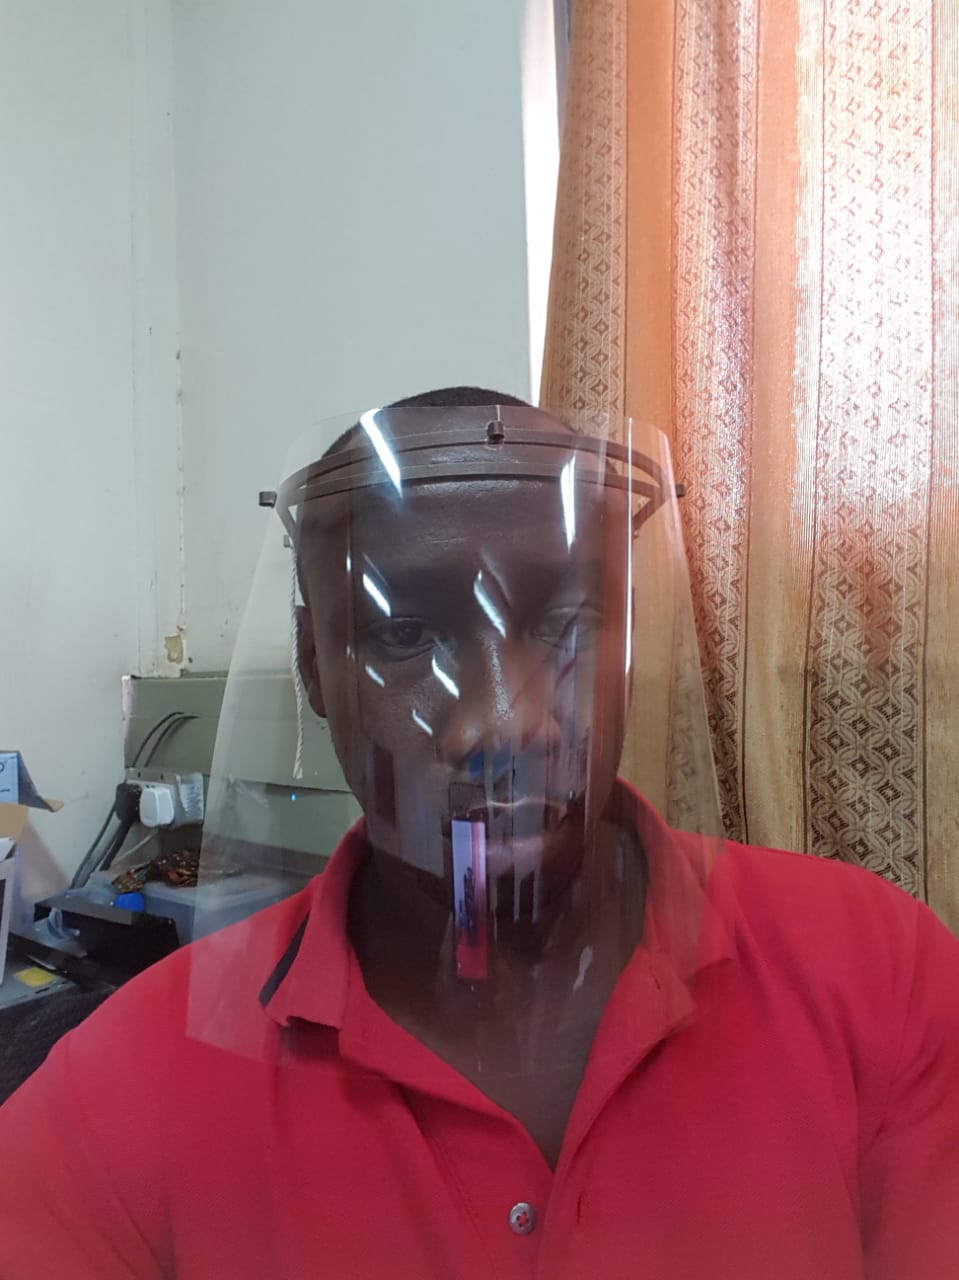 Assembled face mask